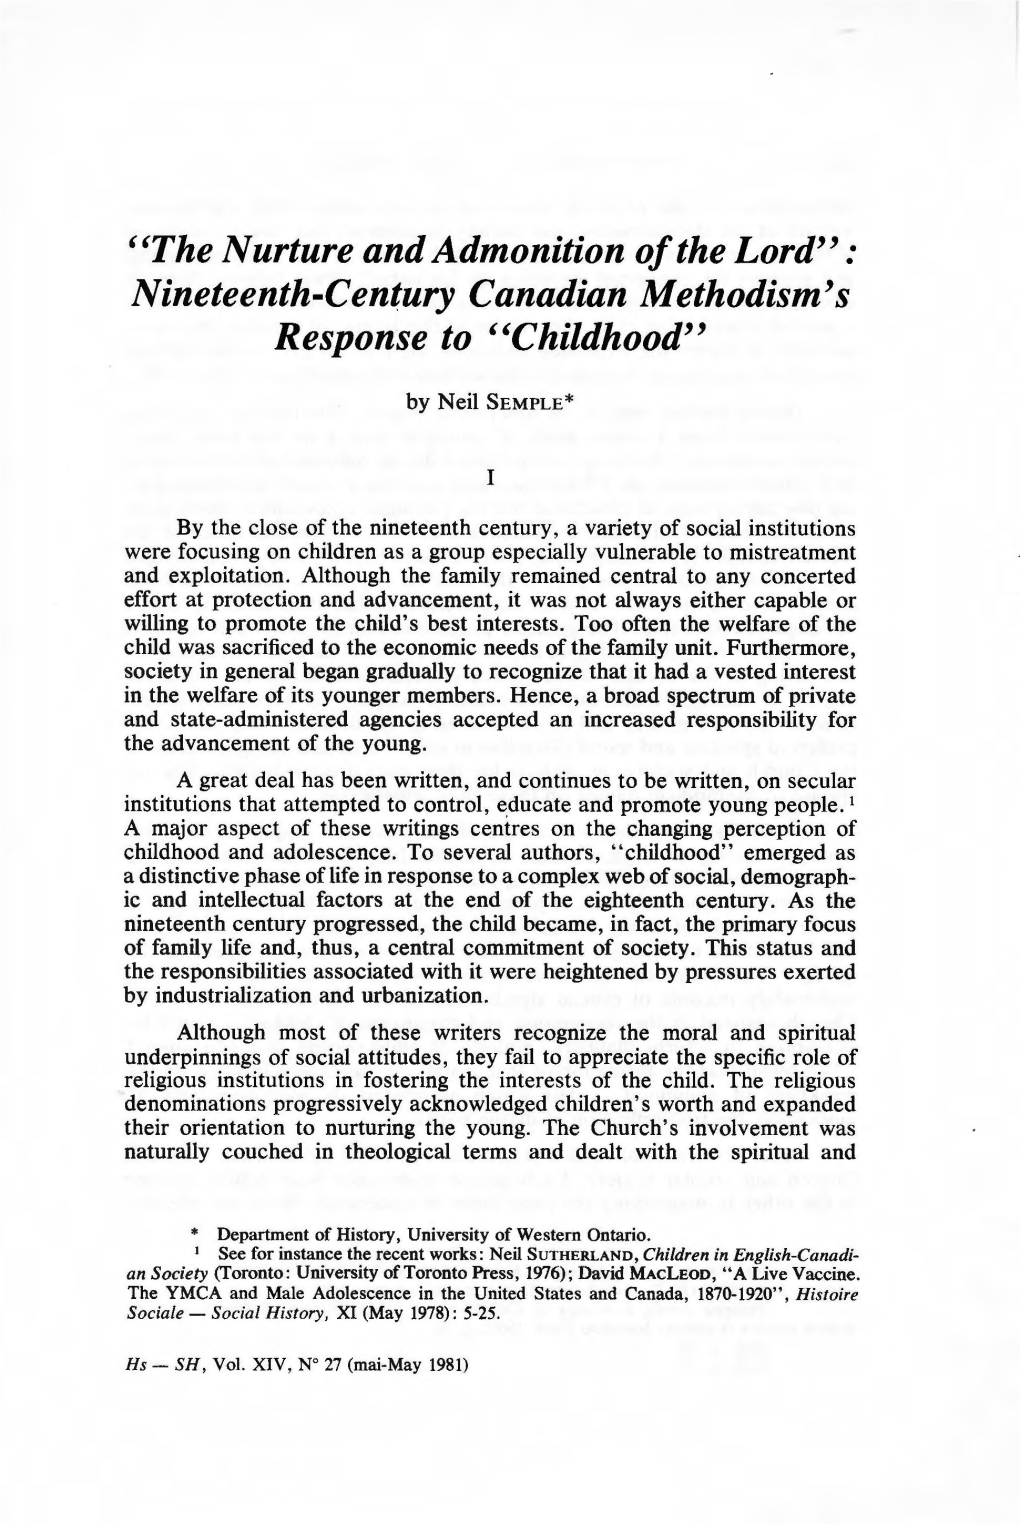 ': Nineteenth-Century Canadian Methodism's Response to "Childhood"